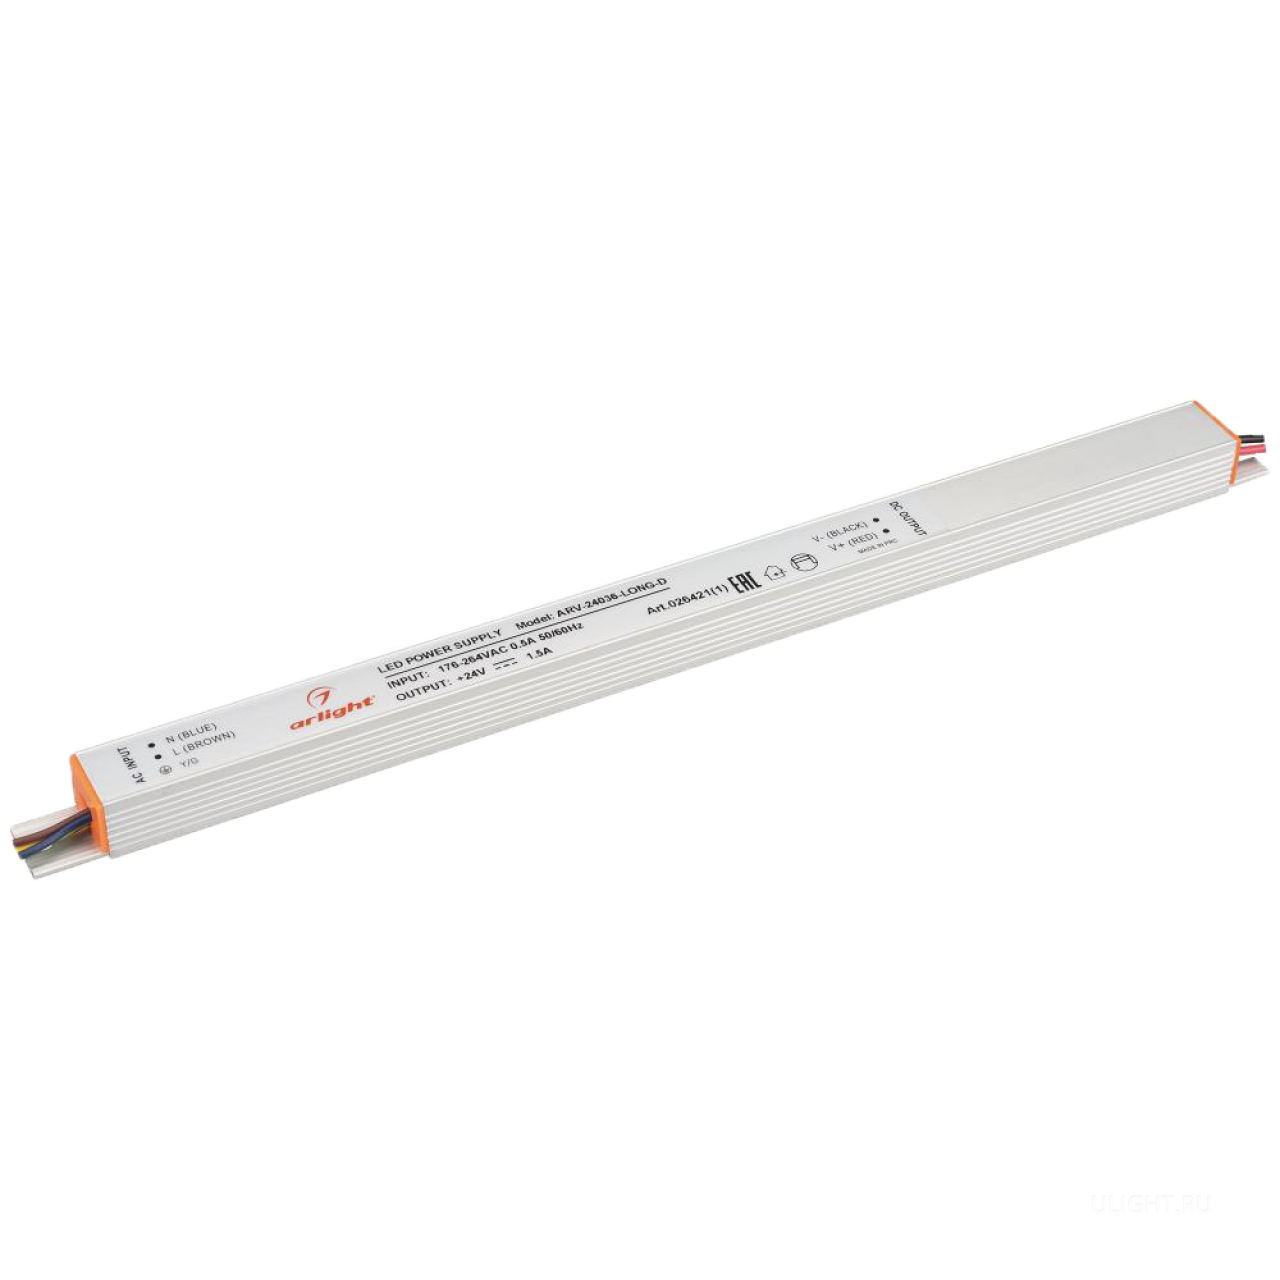 Блок питания ARV-24036-LONG-D (24V, 1.5A, 36W) (Arlight, IP20 Металл, 2 года)